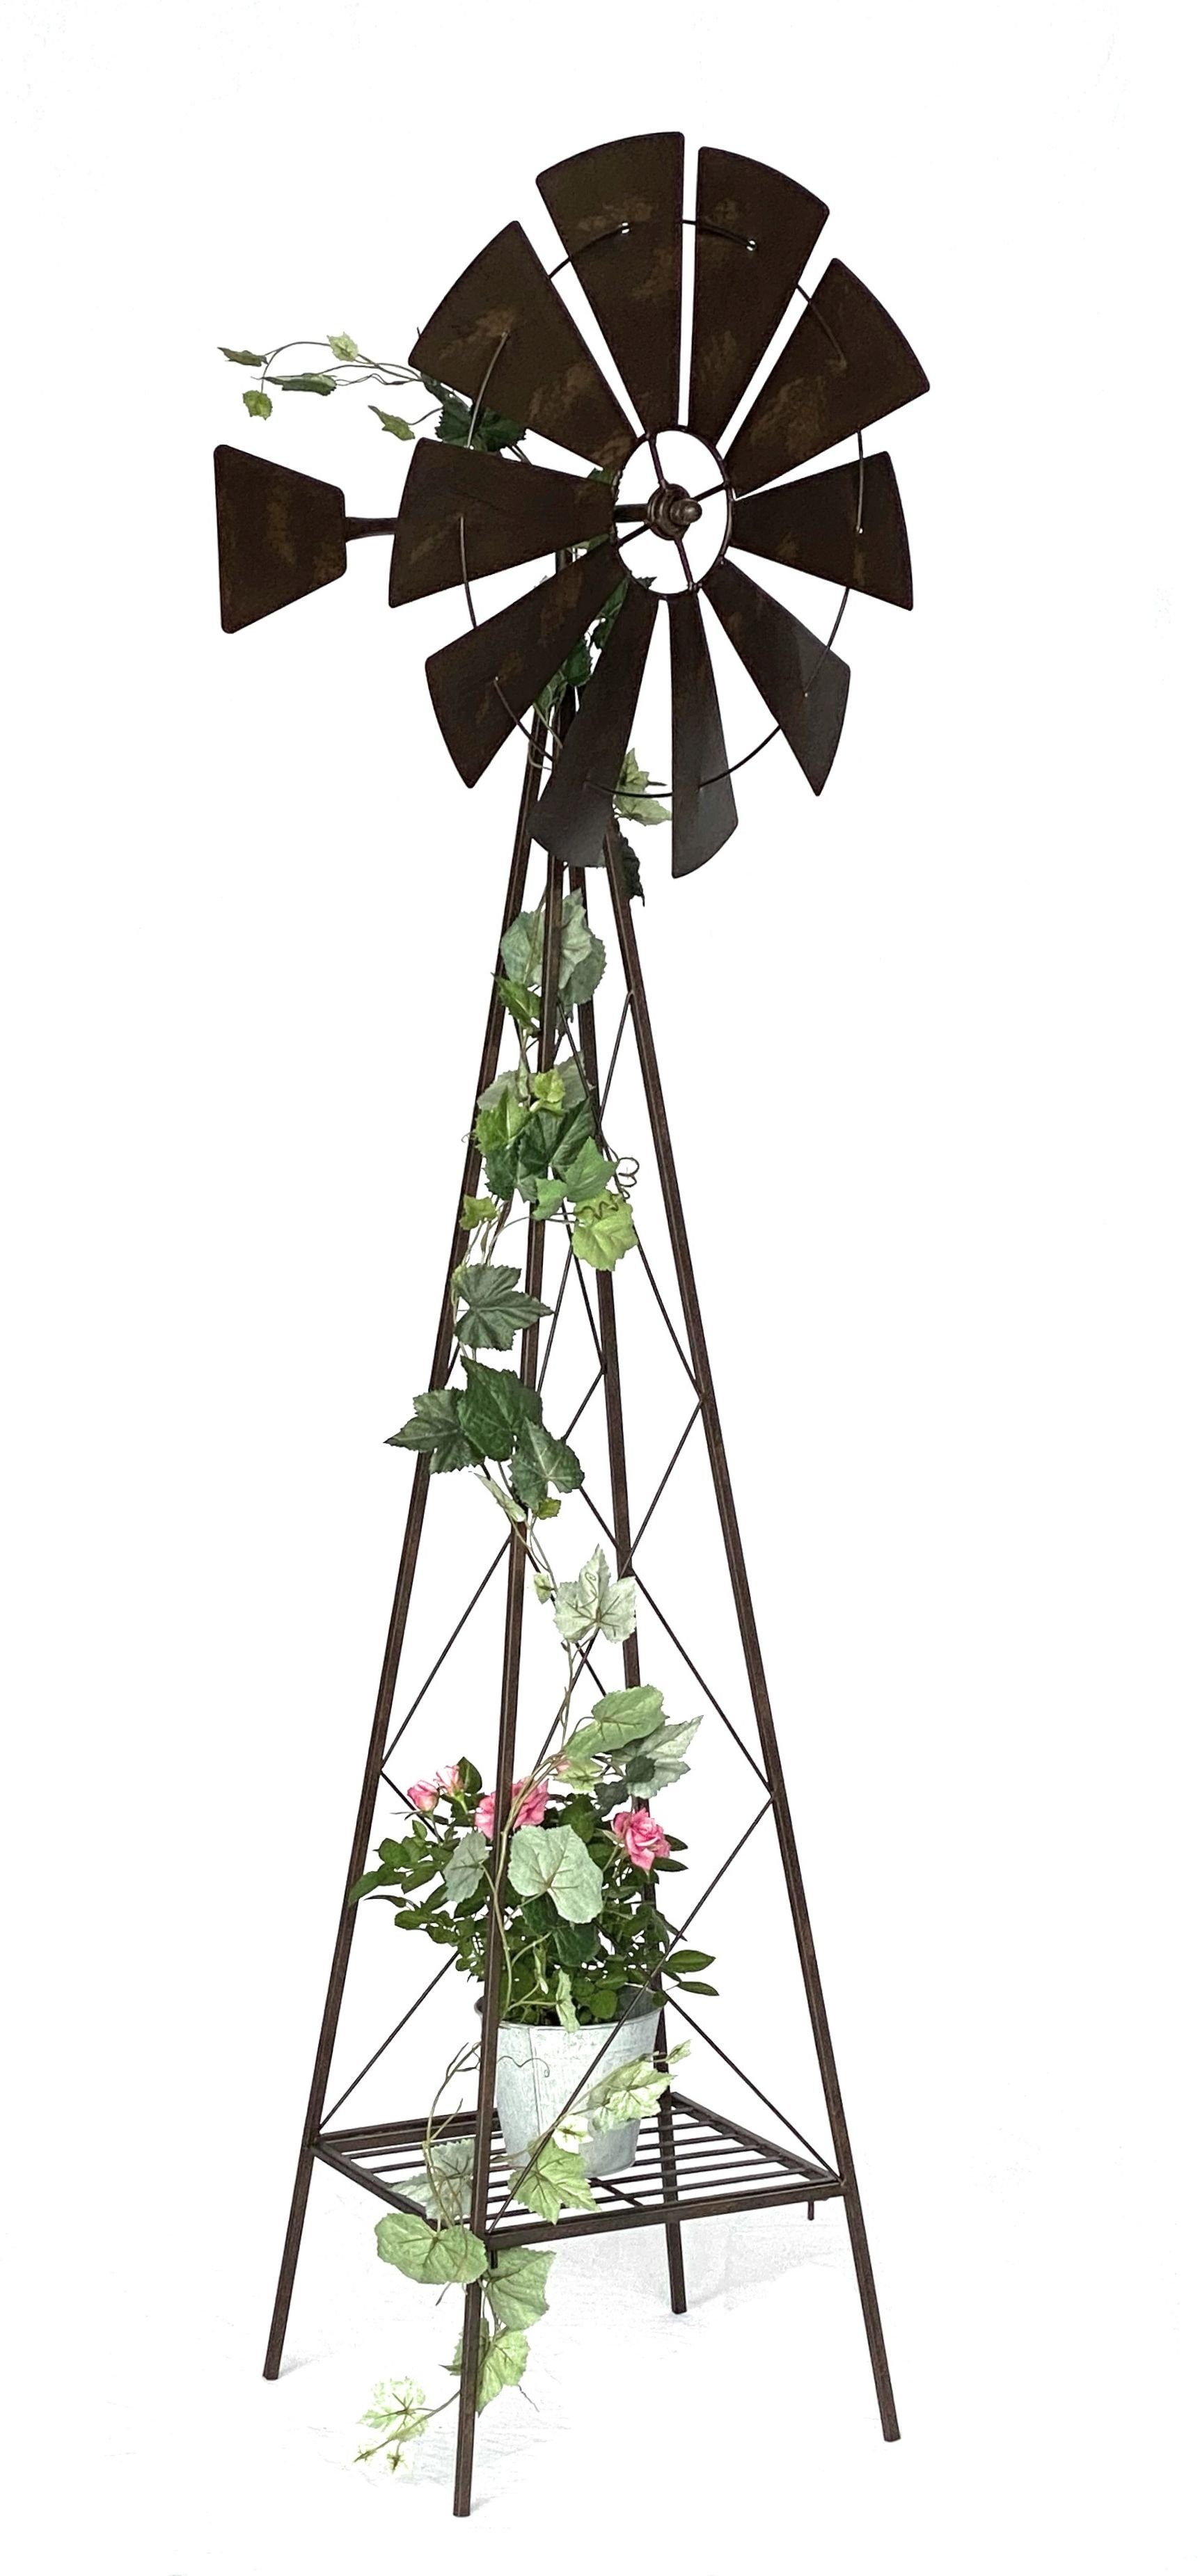 DanDiBo Deko-Windrad 170 kugelgelagert Wetterfest cm Bodenstecker Windmühle 96019 Gartendeko Garten Windspiel Windrad Braun Metall Gartenstecker